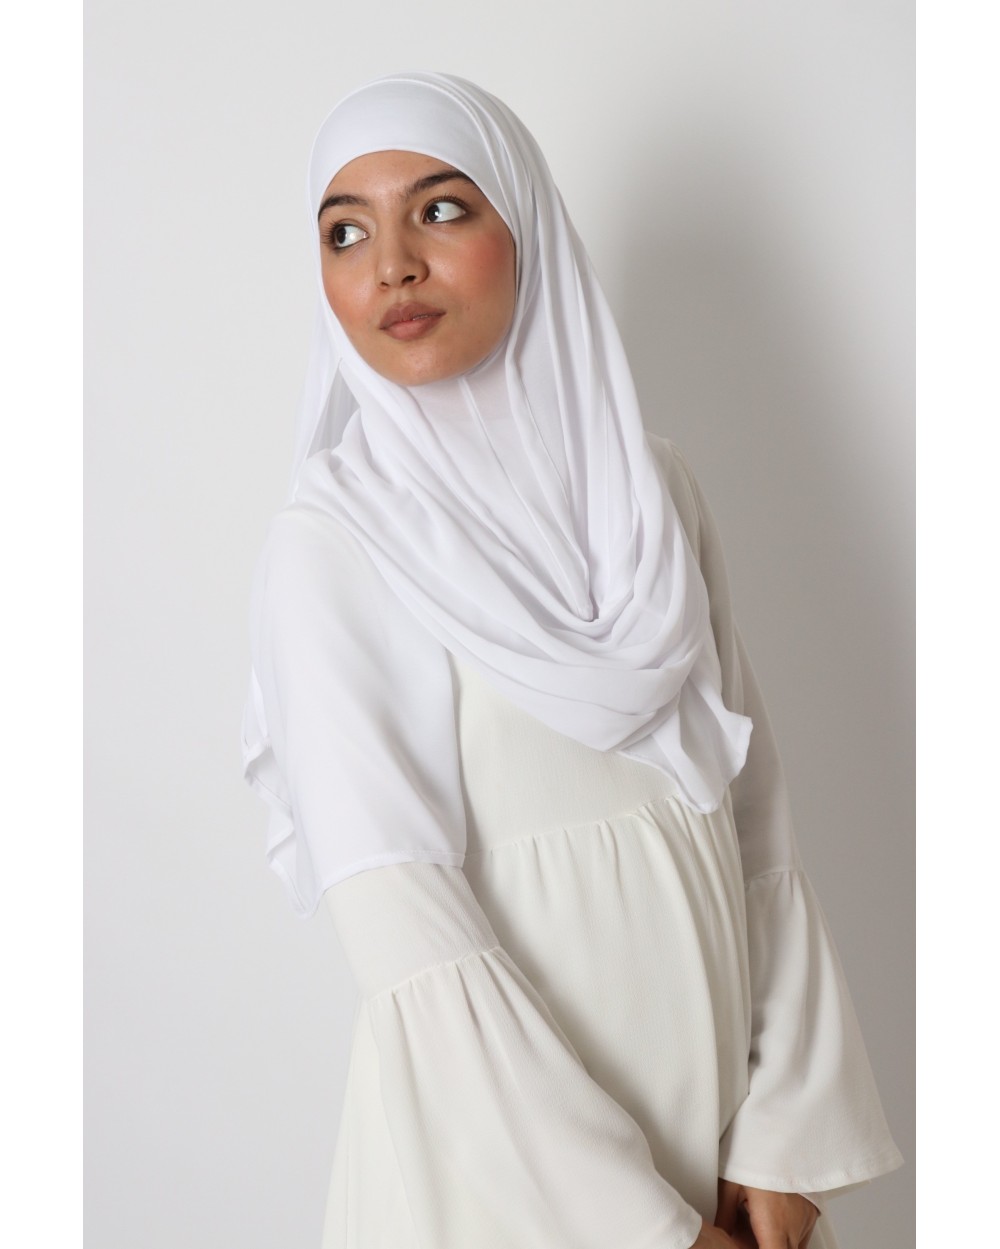 Hijab uni style to put on